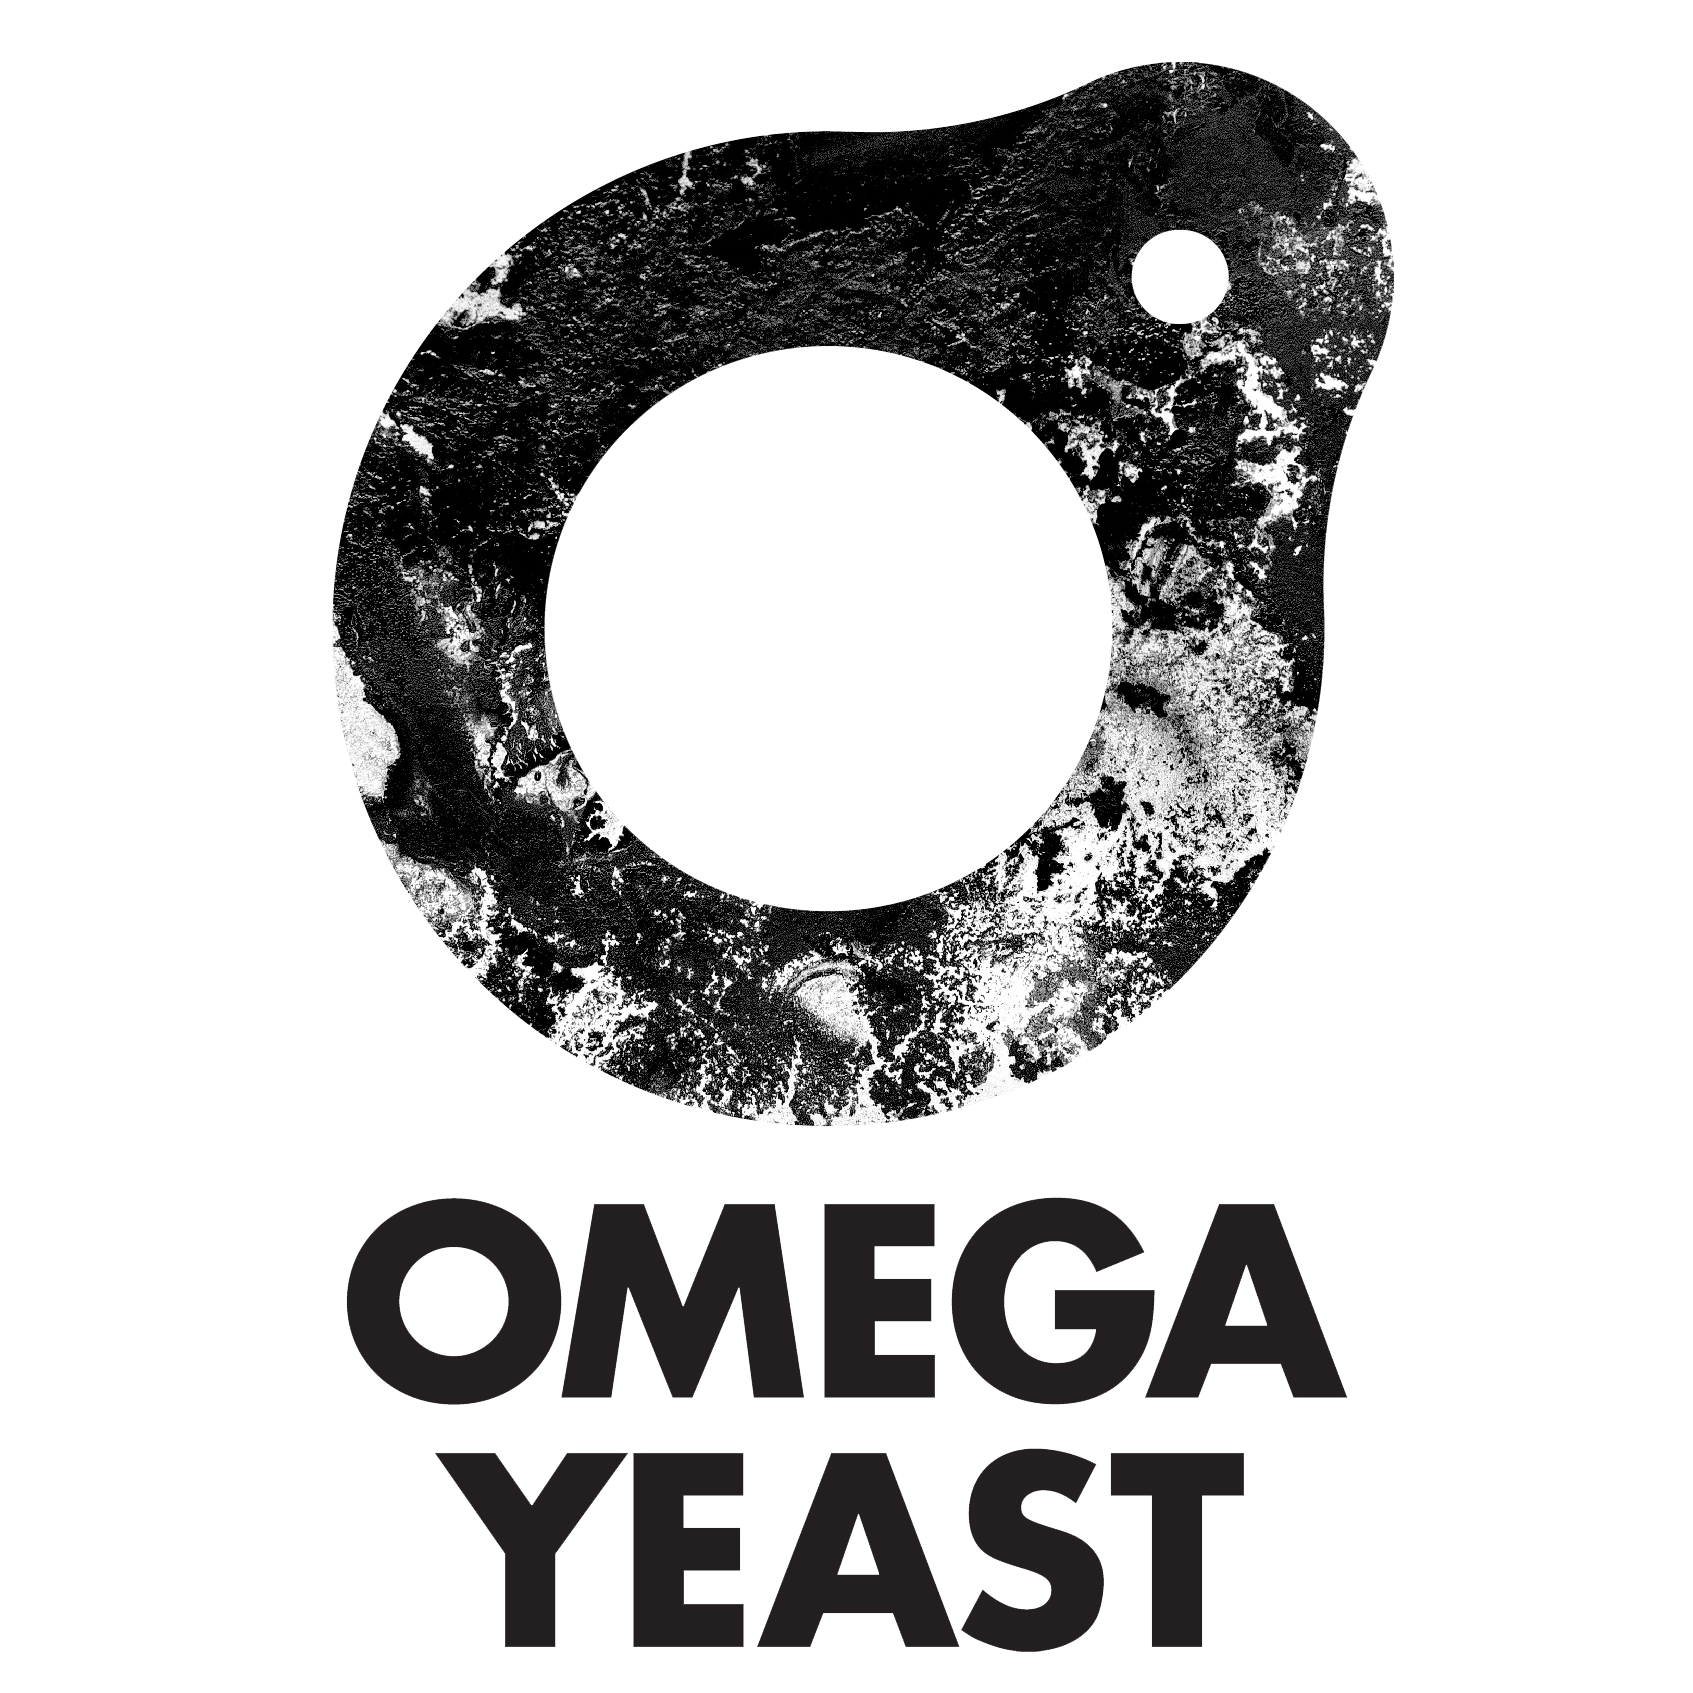 Omega Yeast